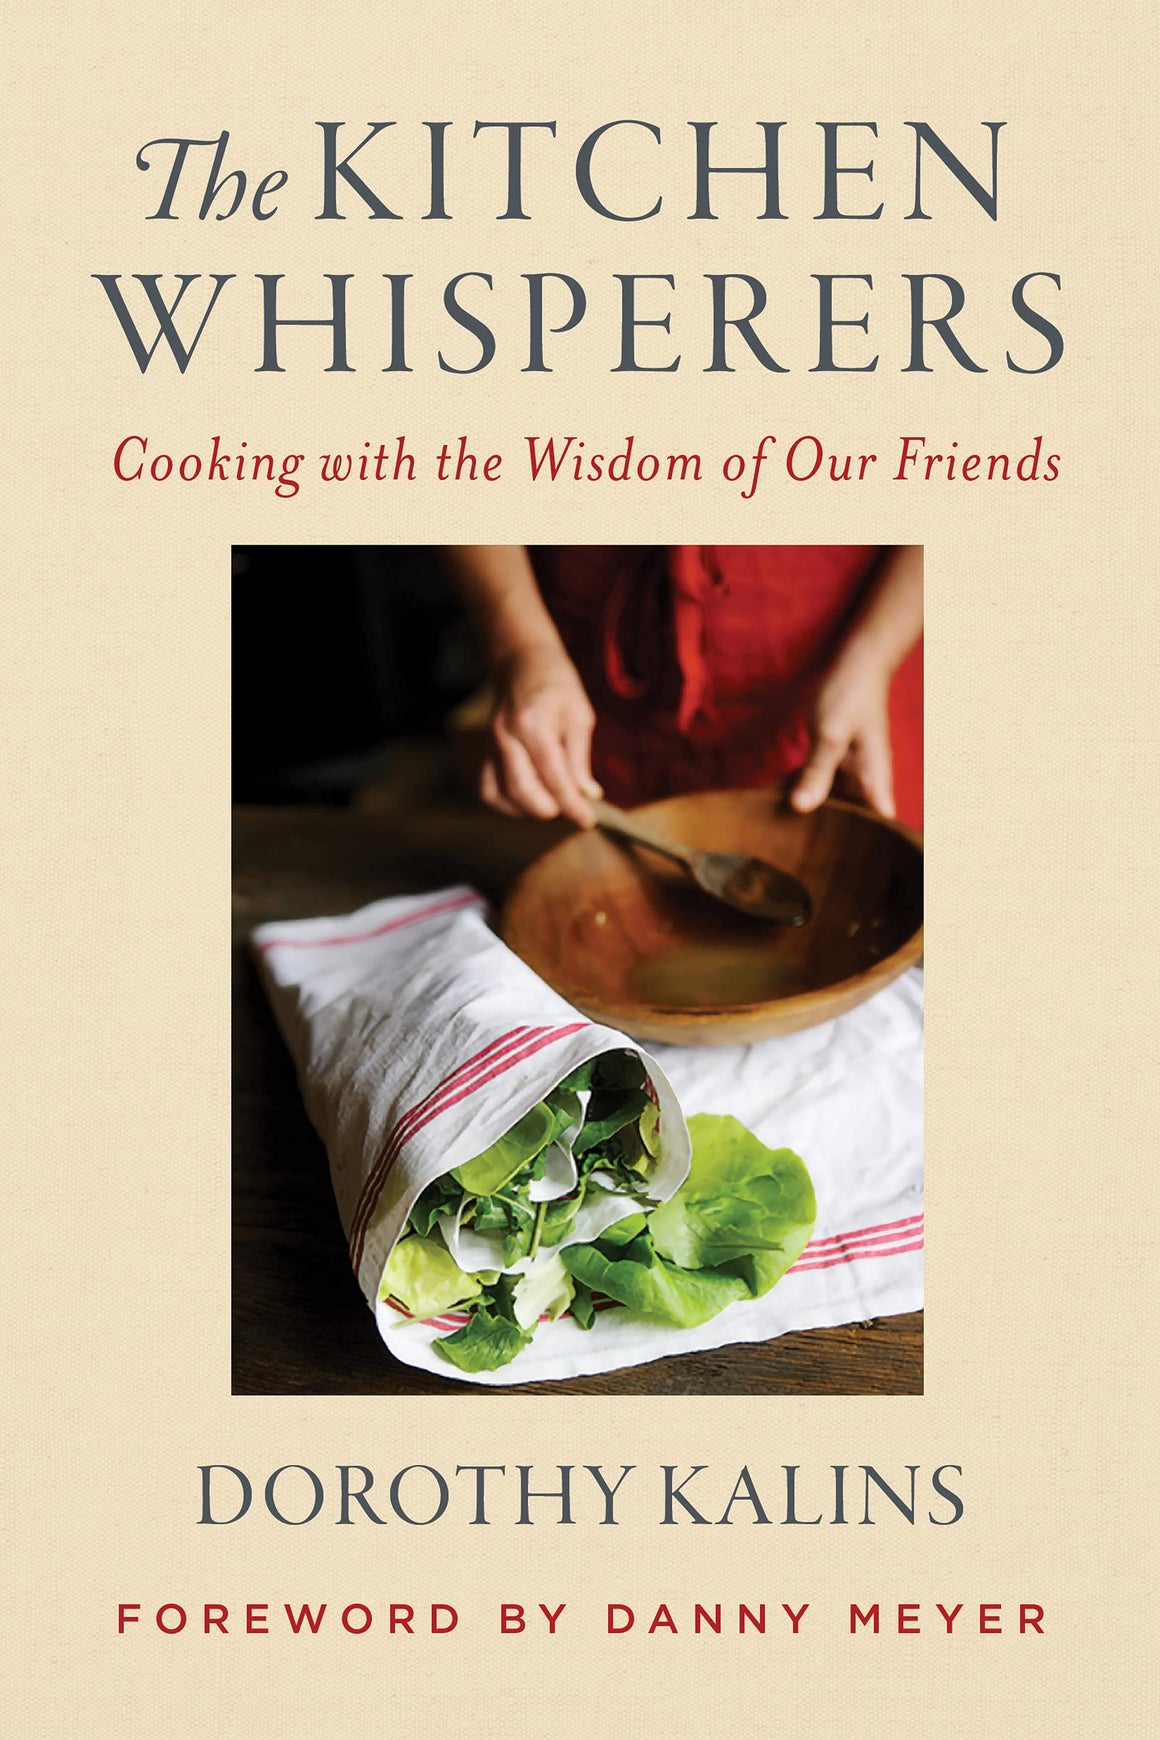 The Kitchen Whisperers (Dorothy Kalins)